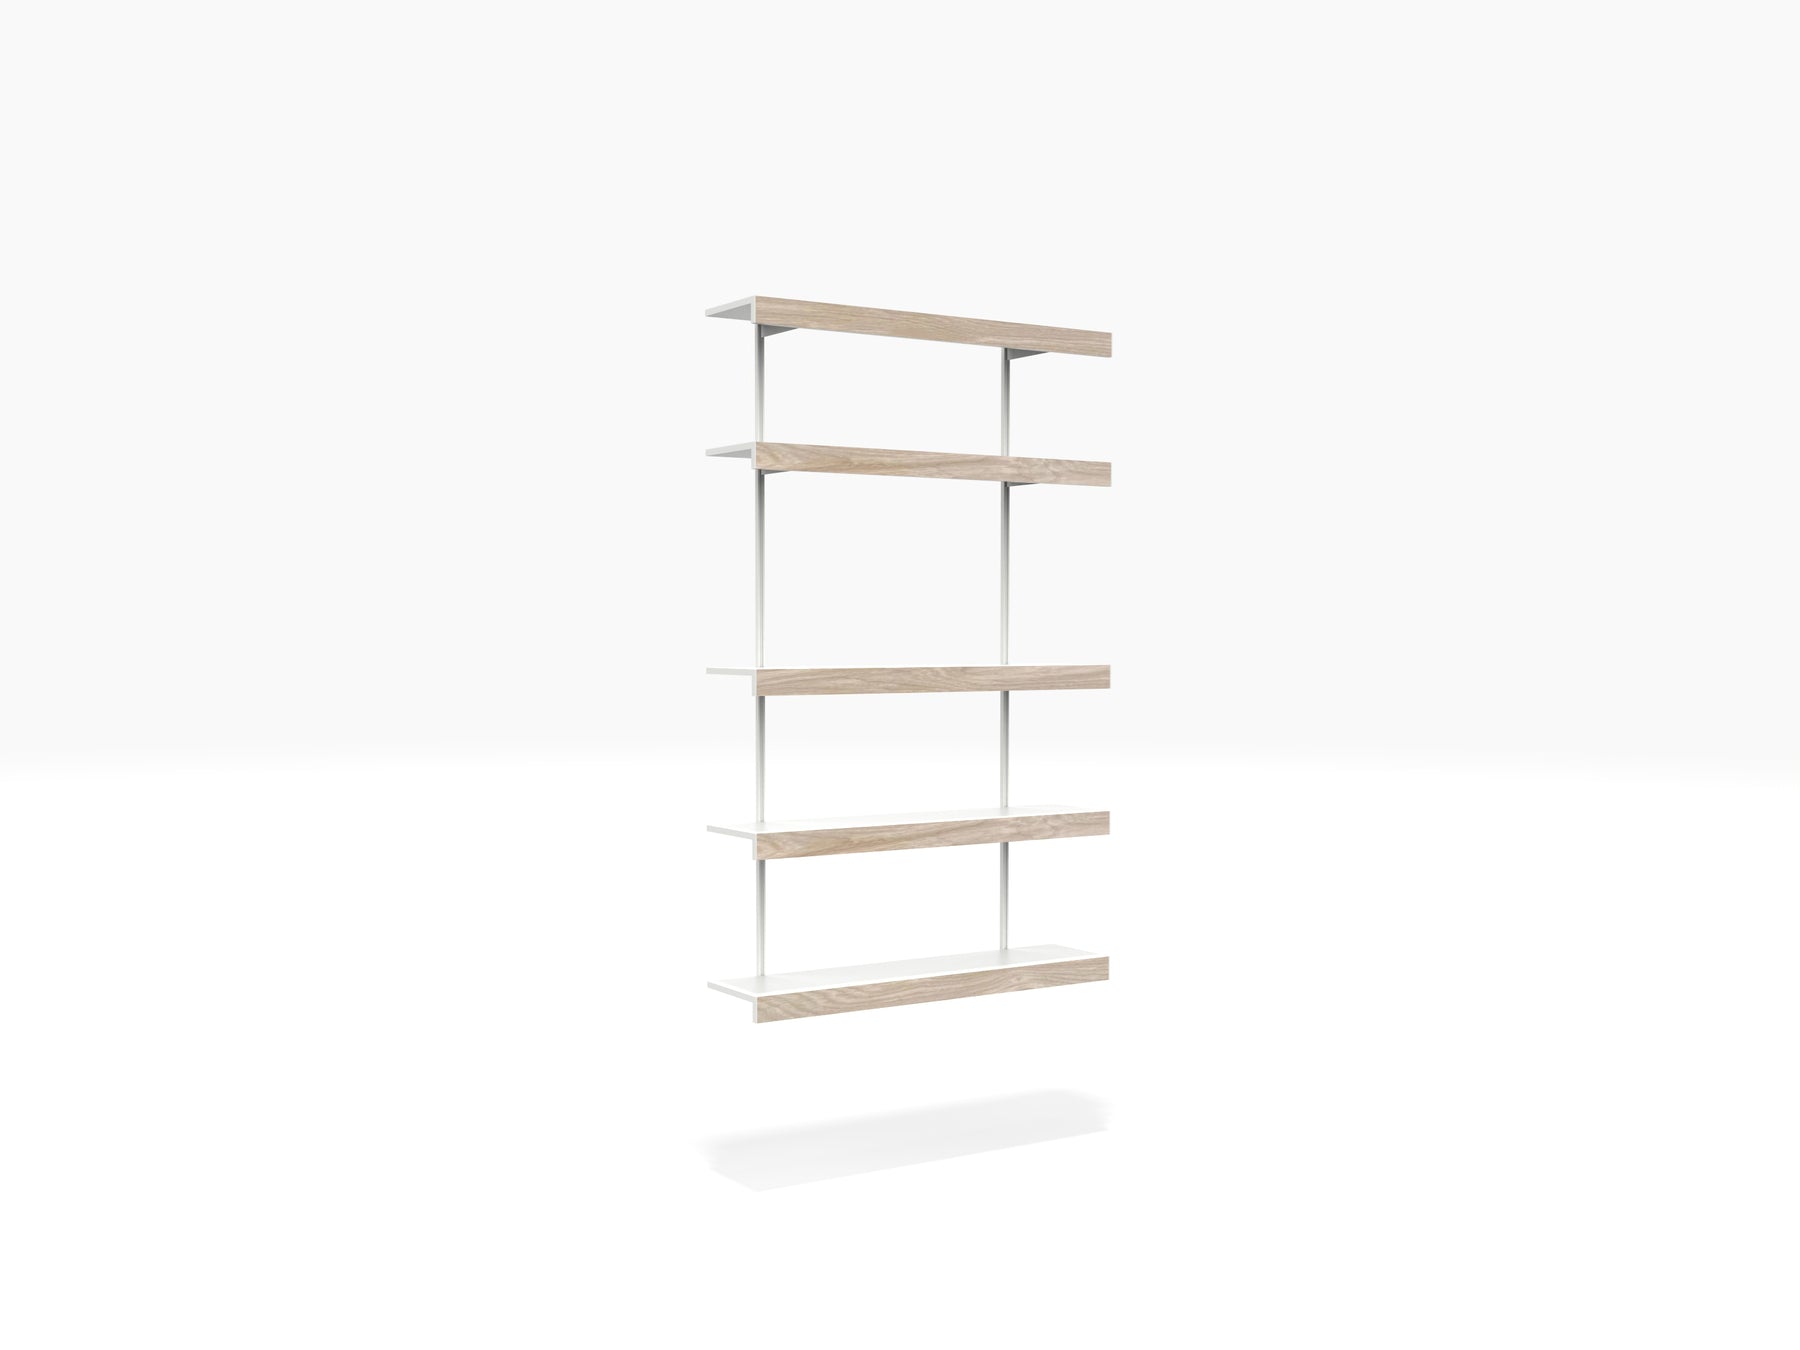 Modular shelving with adjustable wall shelves in white & oak